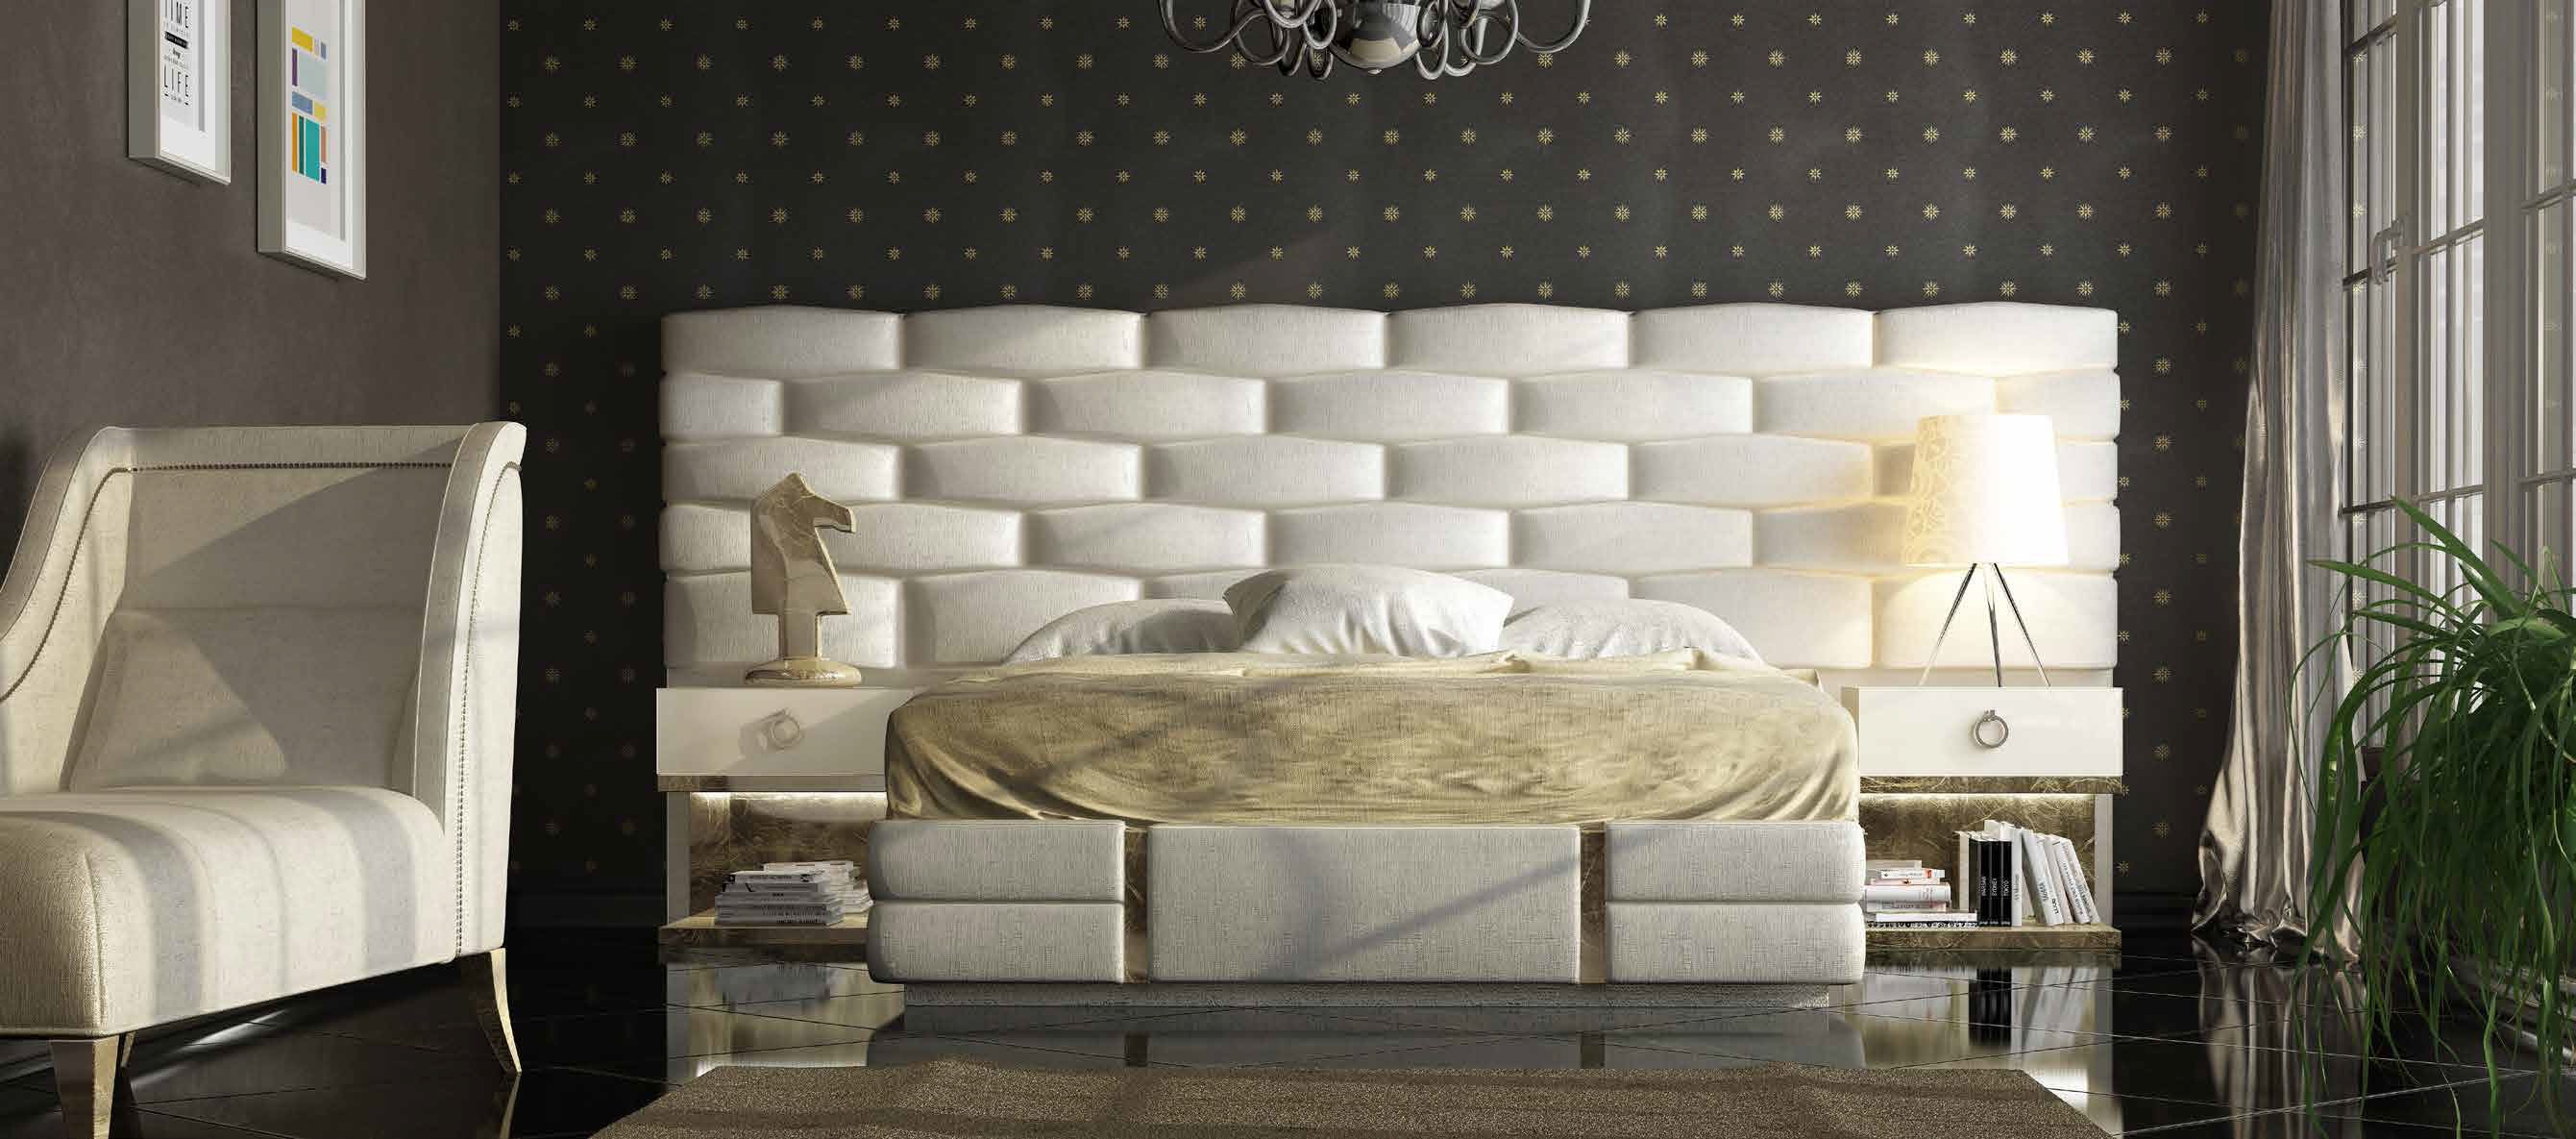 Brands Garcia Sabate, Modern Bedroom Spain DOR 37